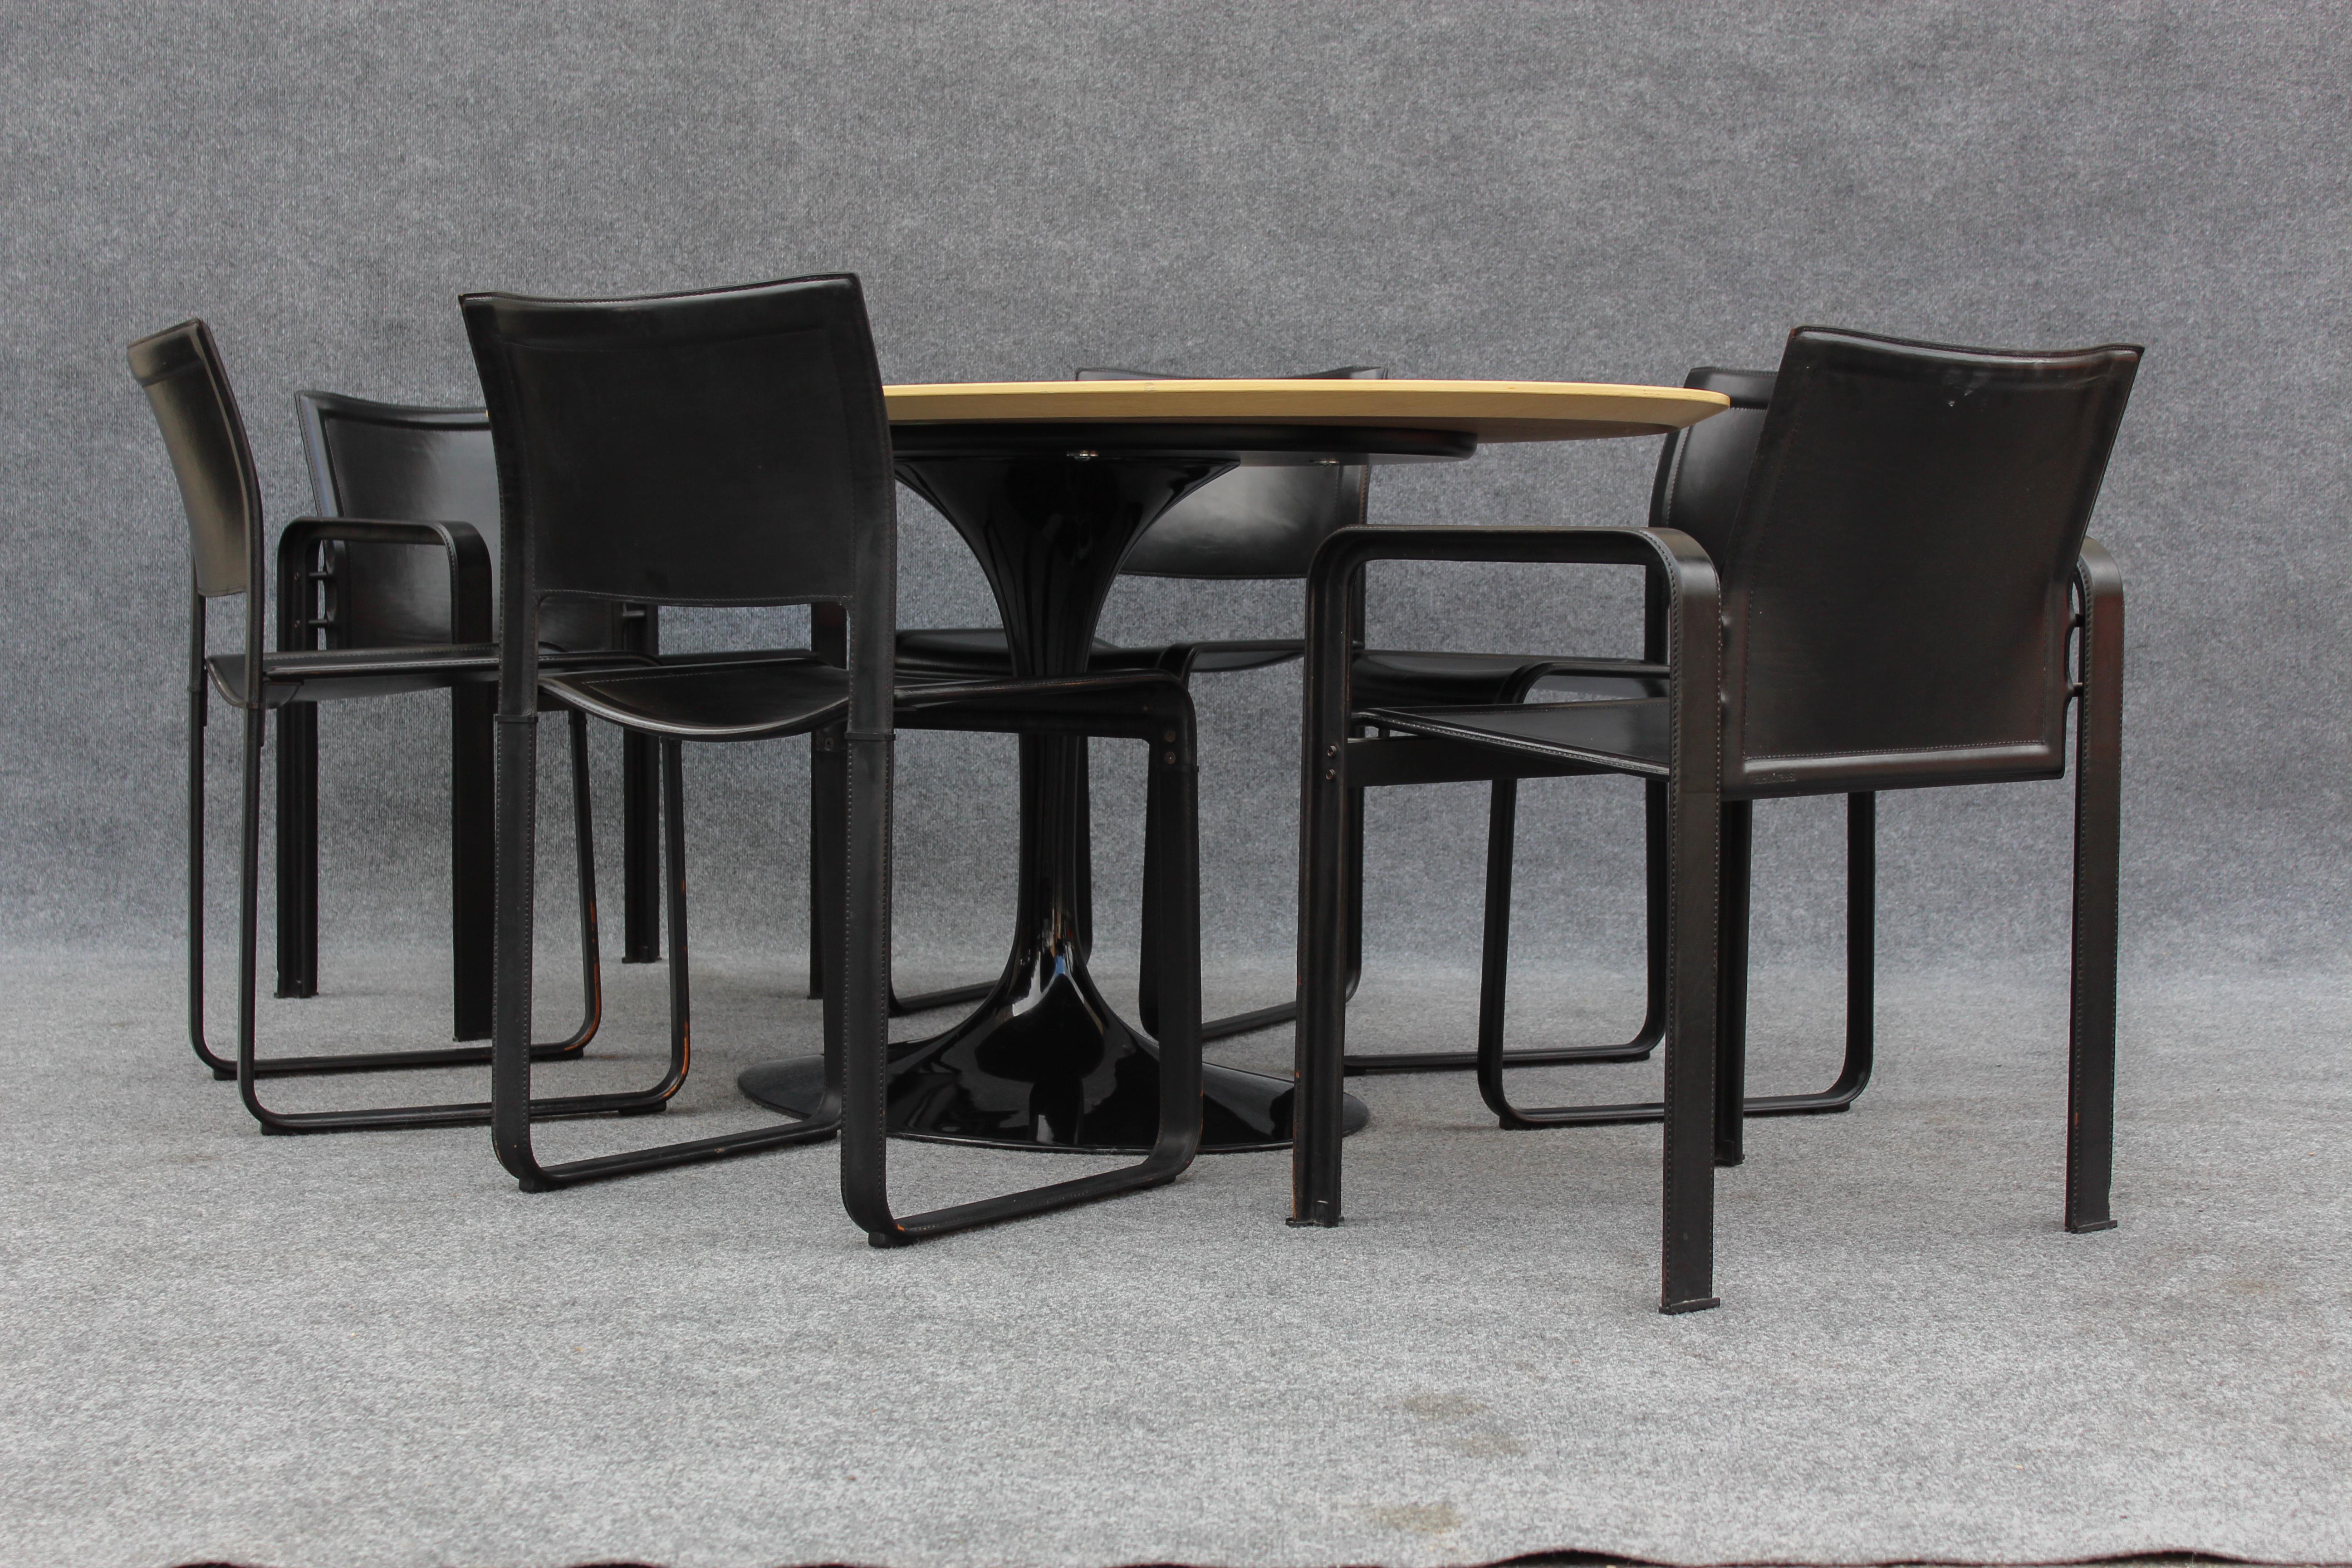 Table de salle à manger Tulipe ovale Eero Saarinen Knoll 66x38 po. avec plateau en bois blond et base noire 4